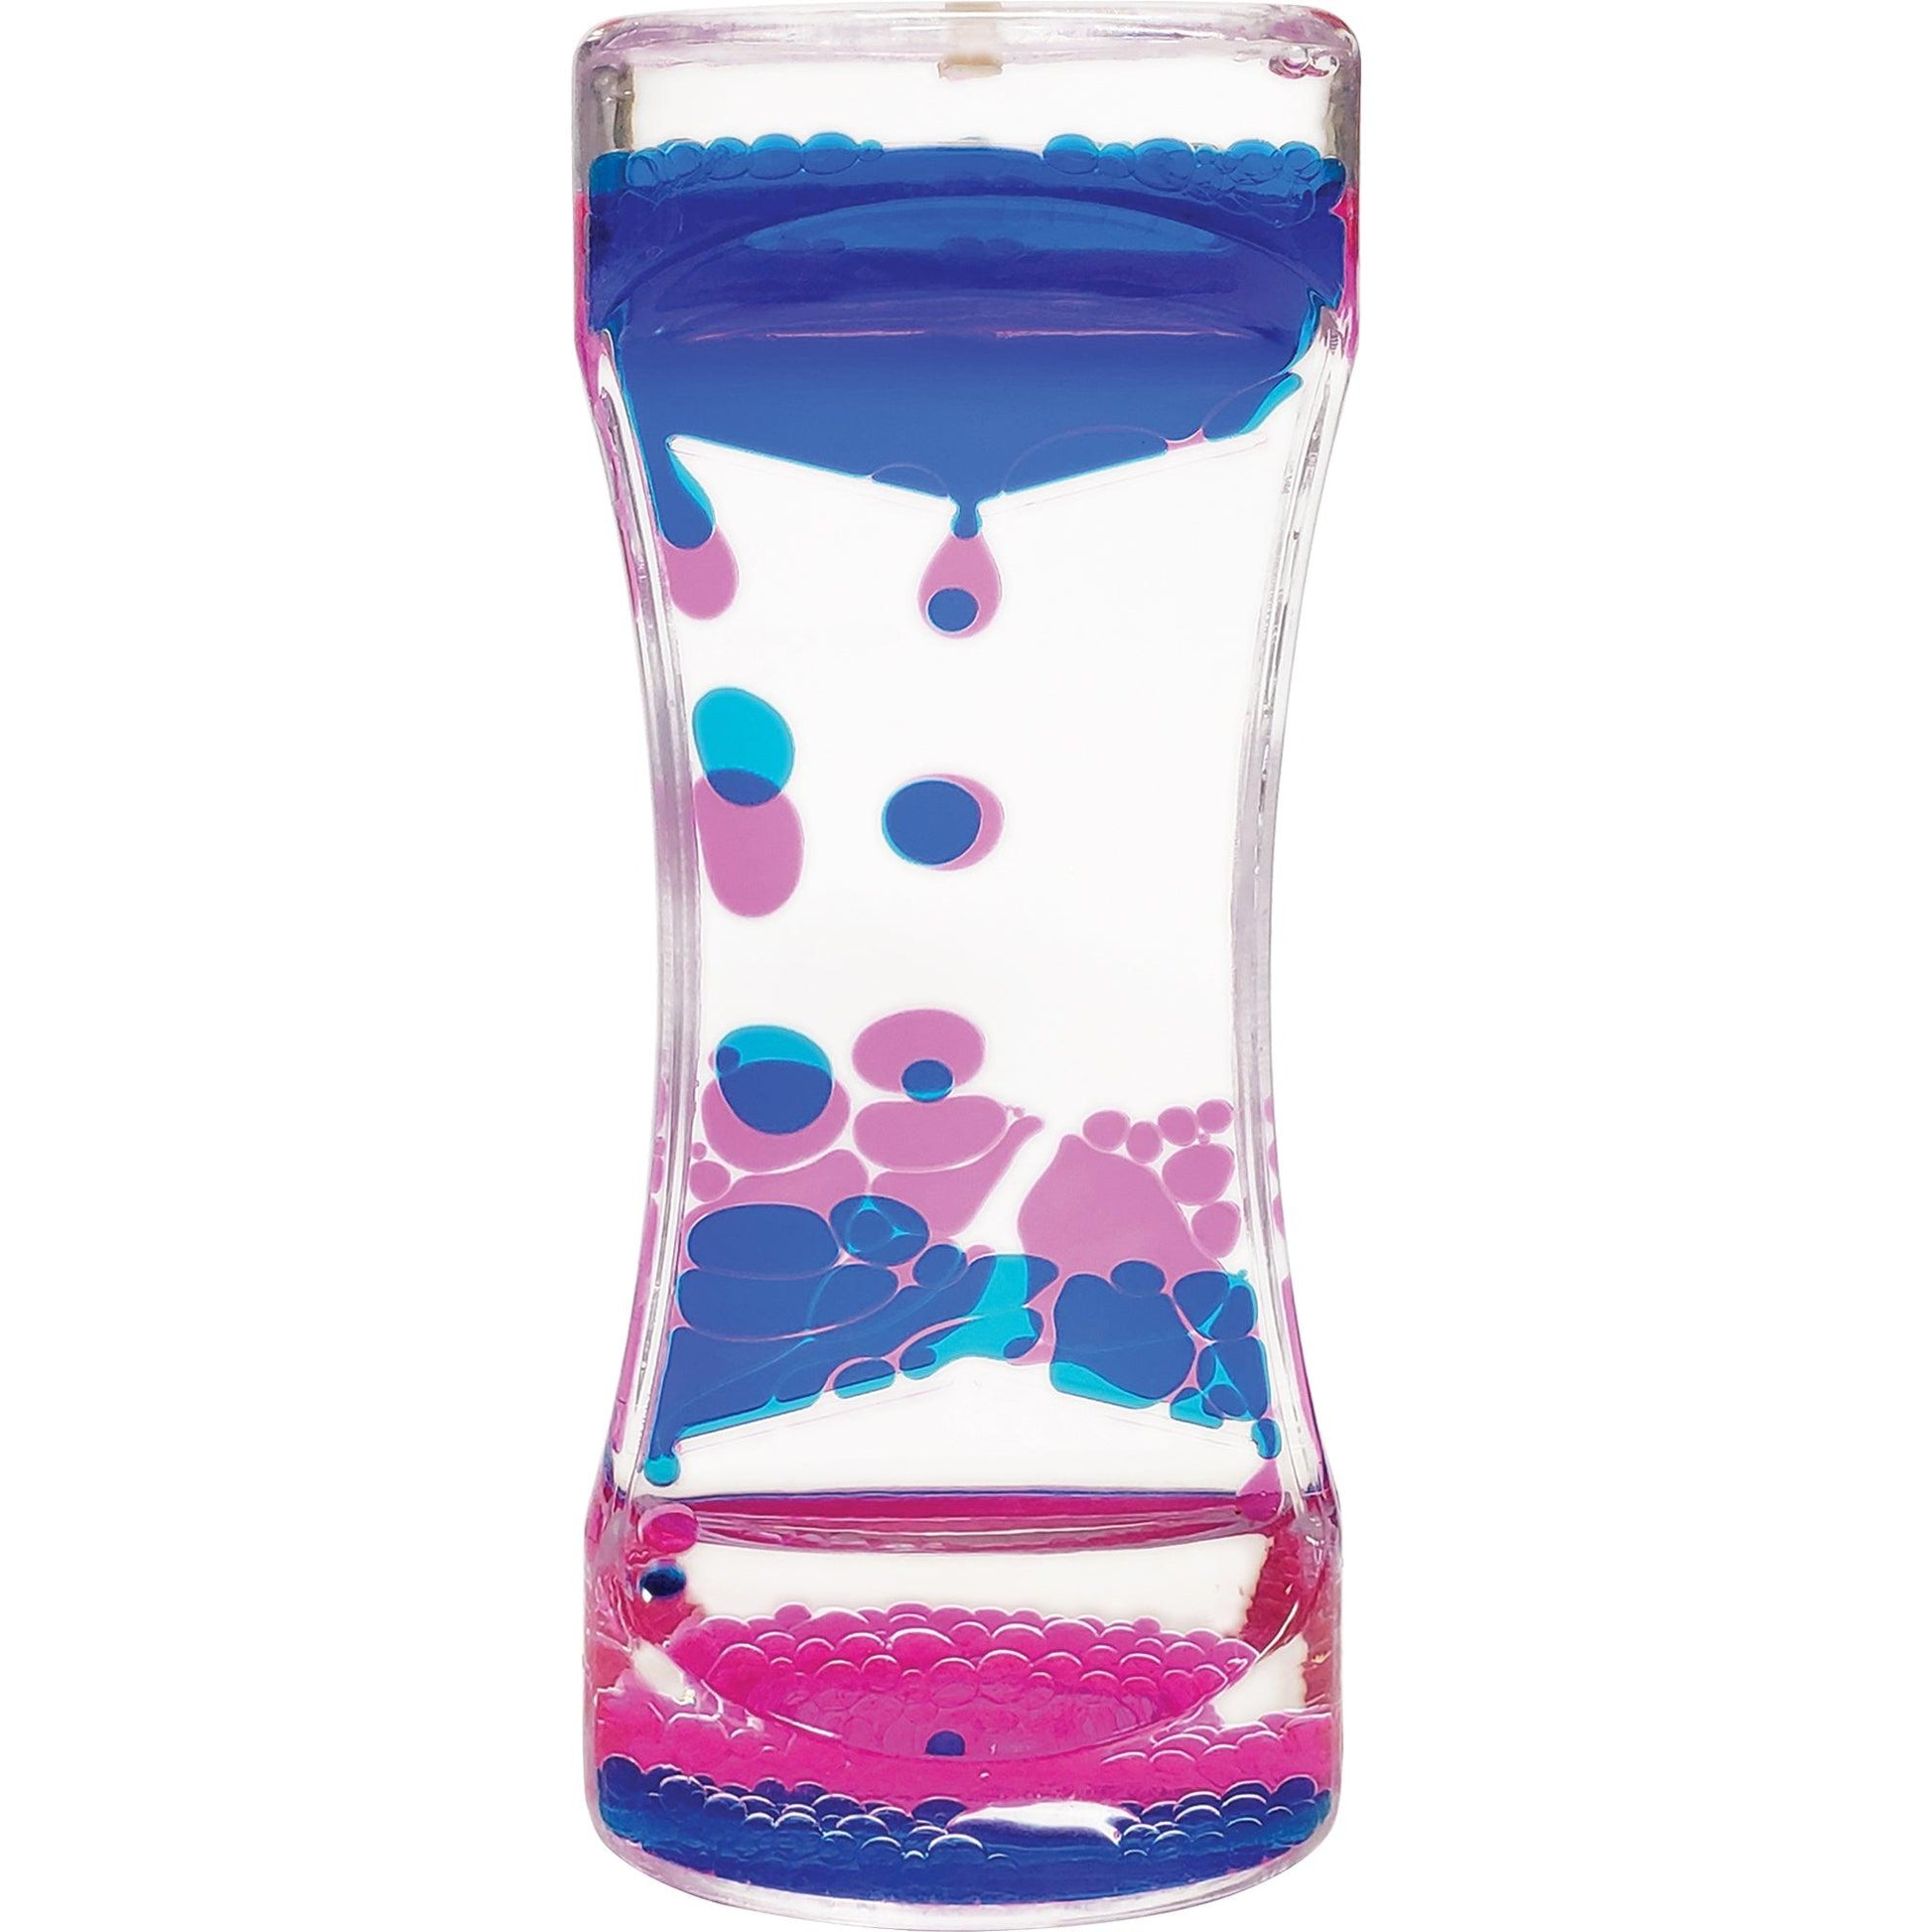 Blue & Pink Liquid Motion Bubbler, Pack of 6 - Loomini